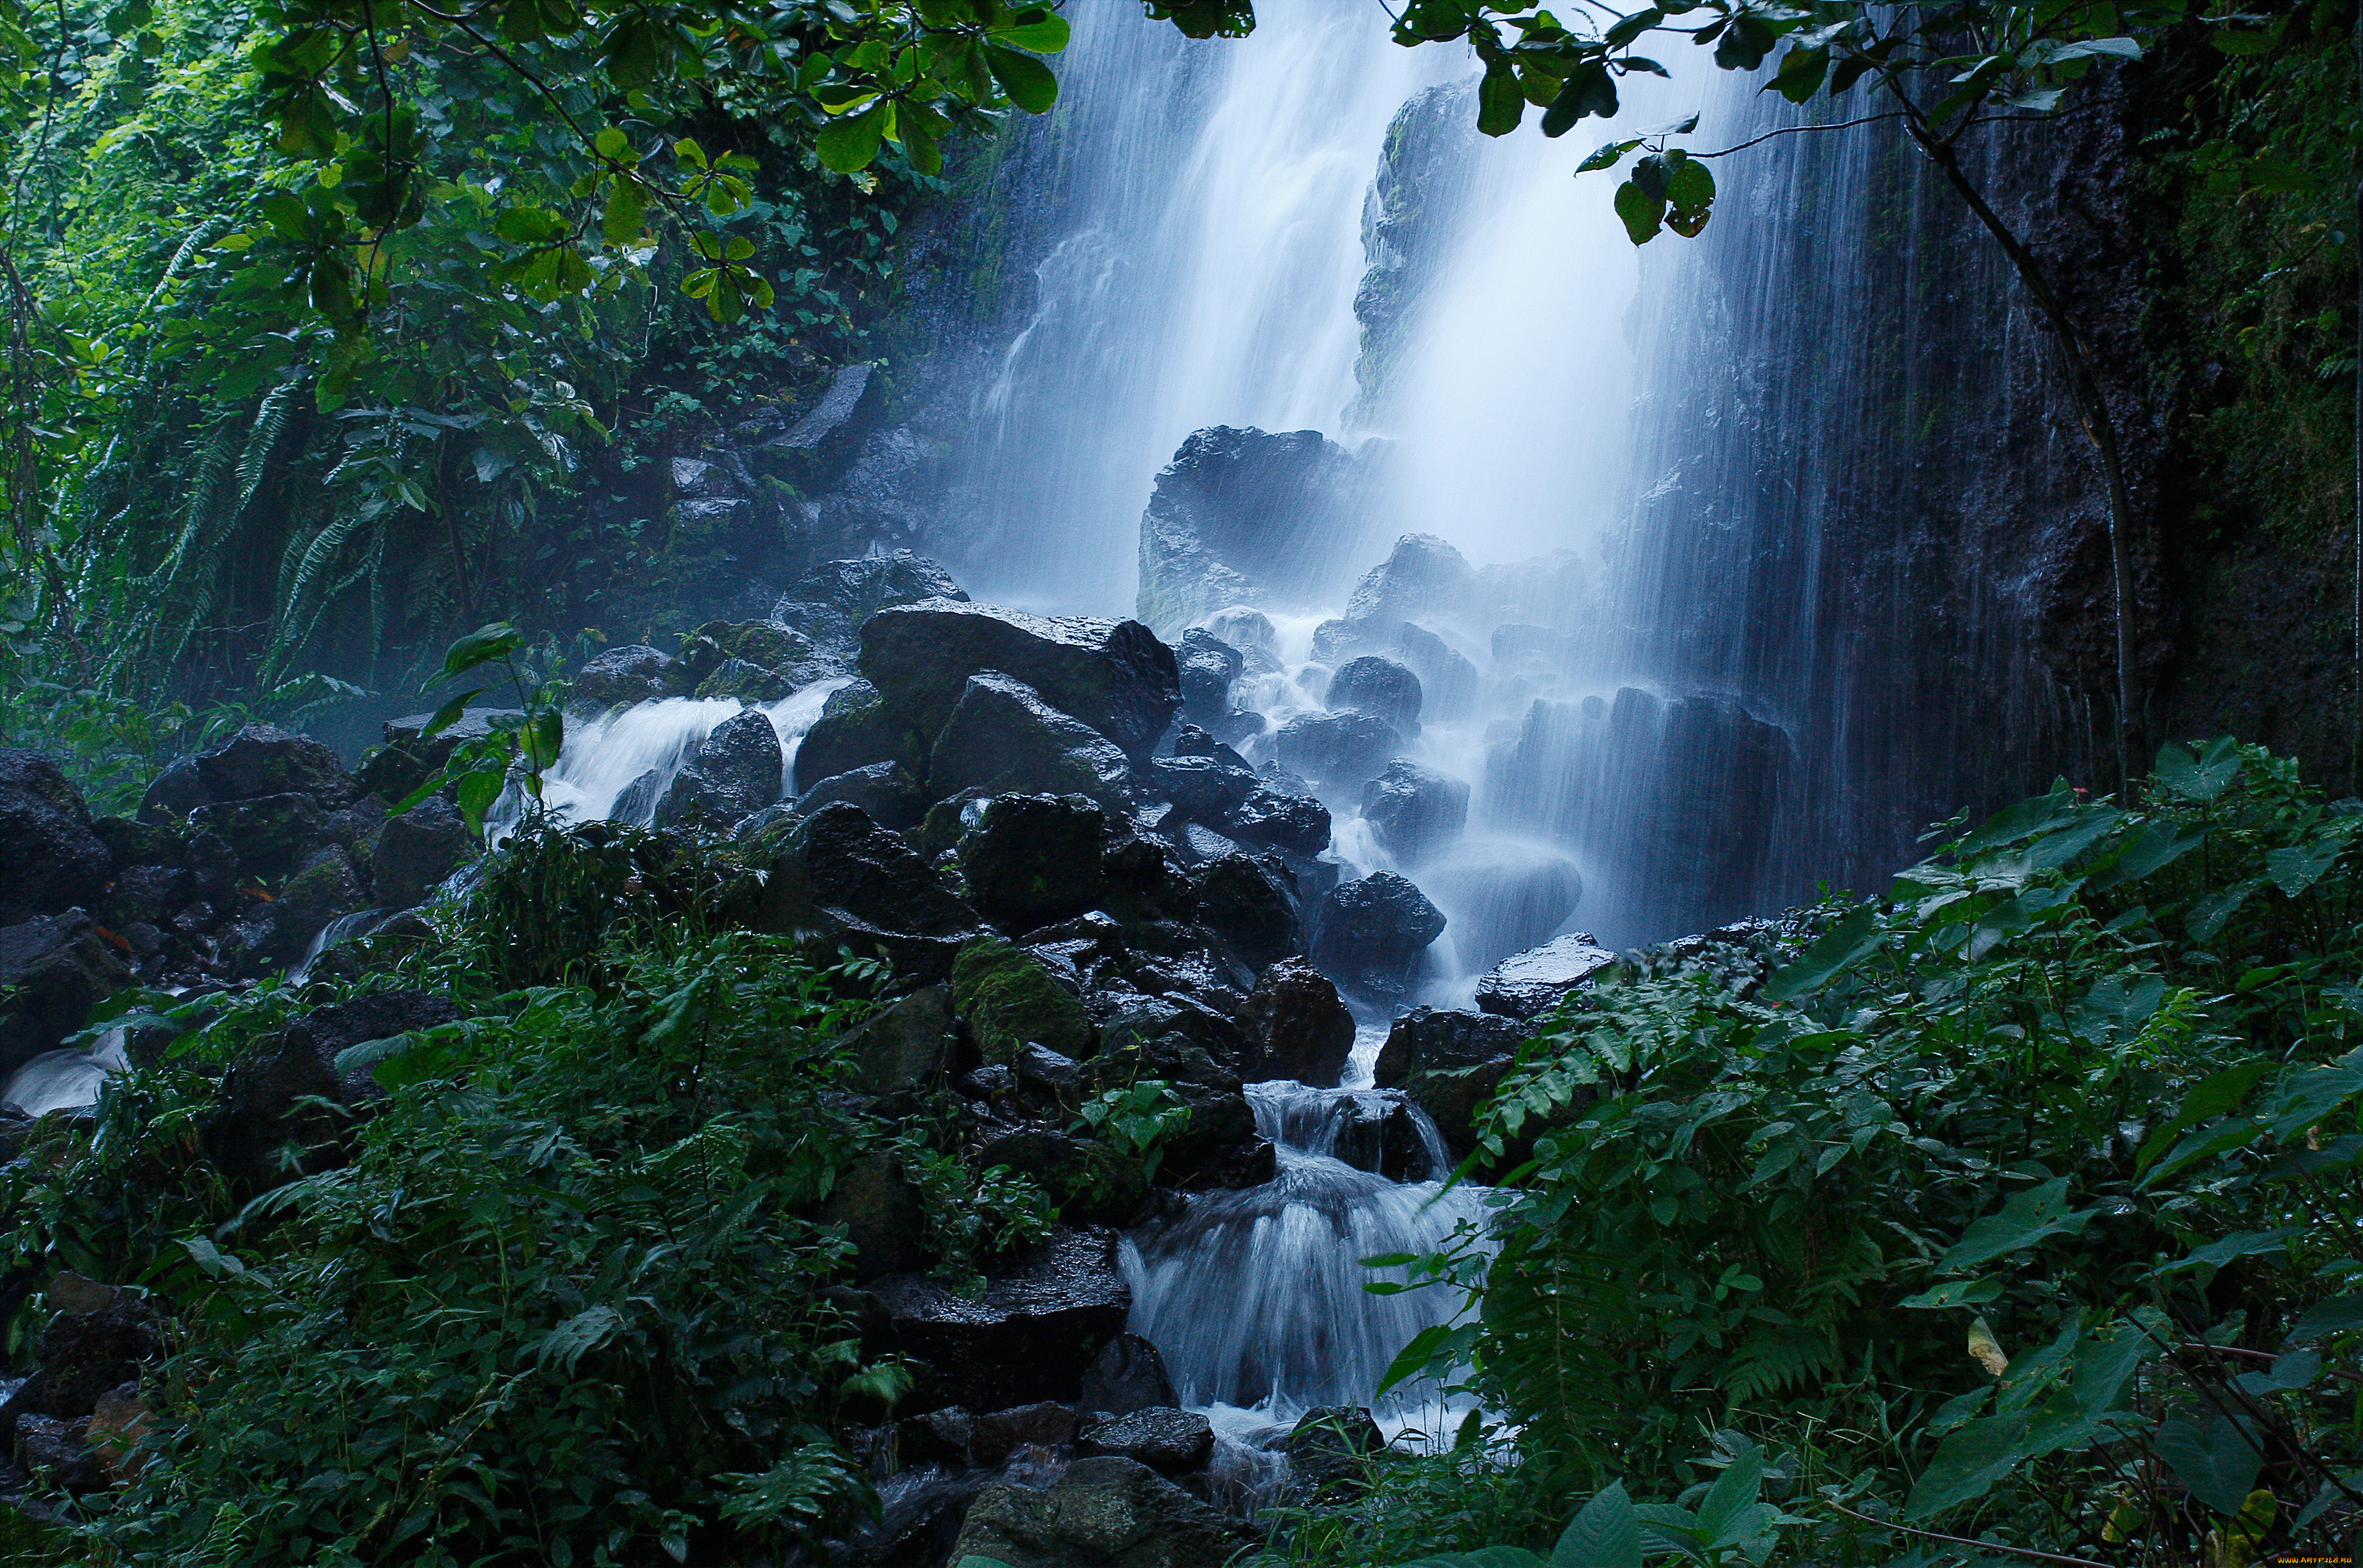 Обои на телефон живой водопад. Водопад Мосбрей. Природа водопад. Лесной водопад. Живая природа водопады.